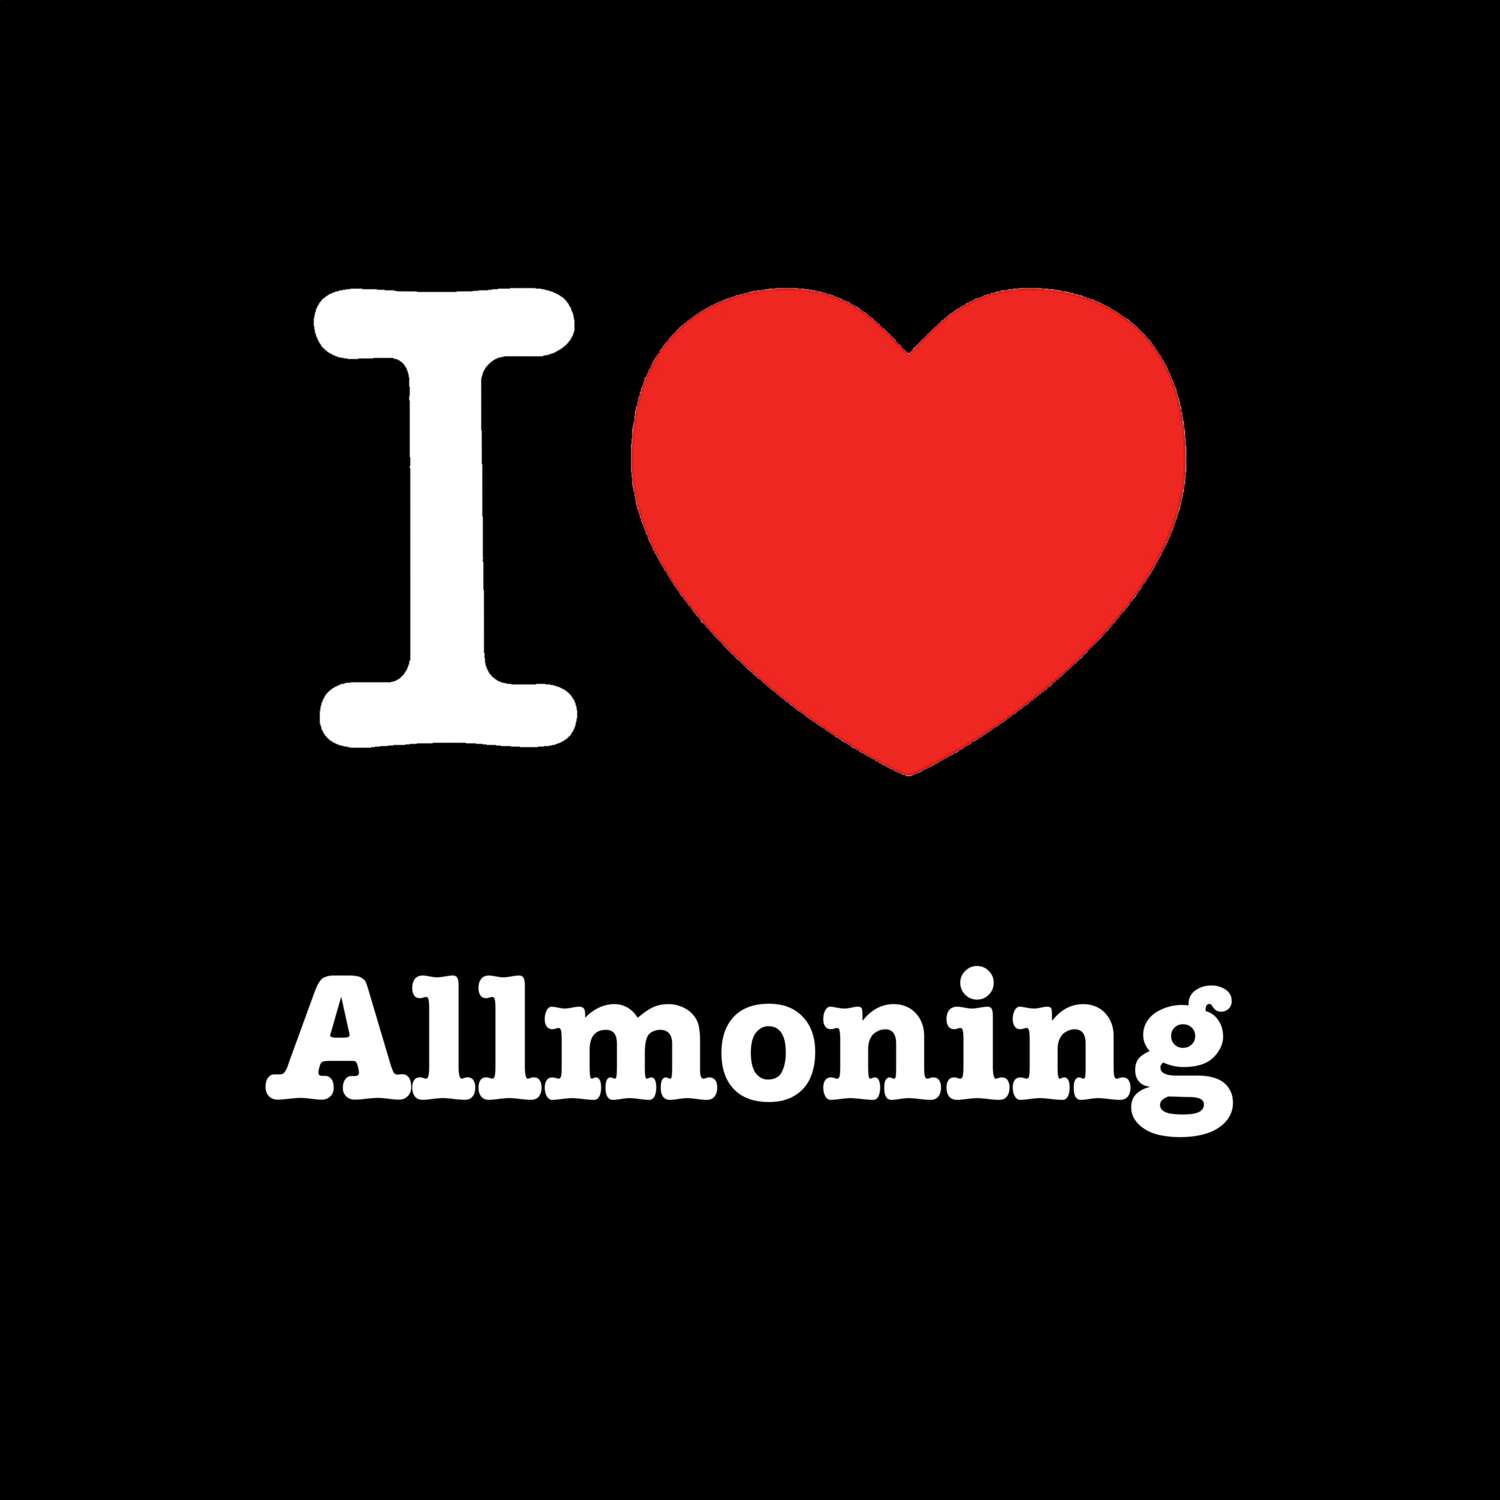 Allmoning T-Shirt »I love«